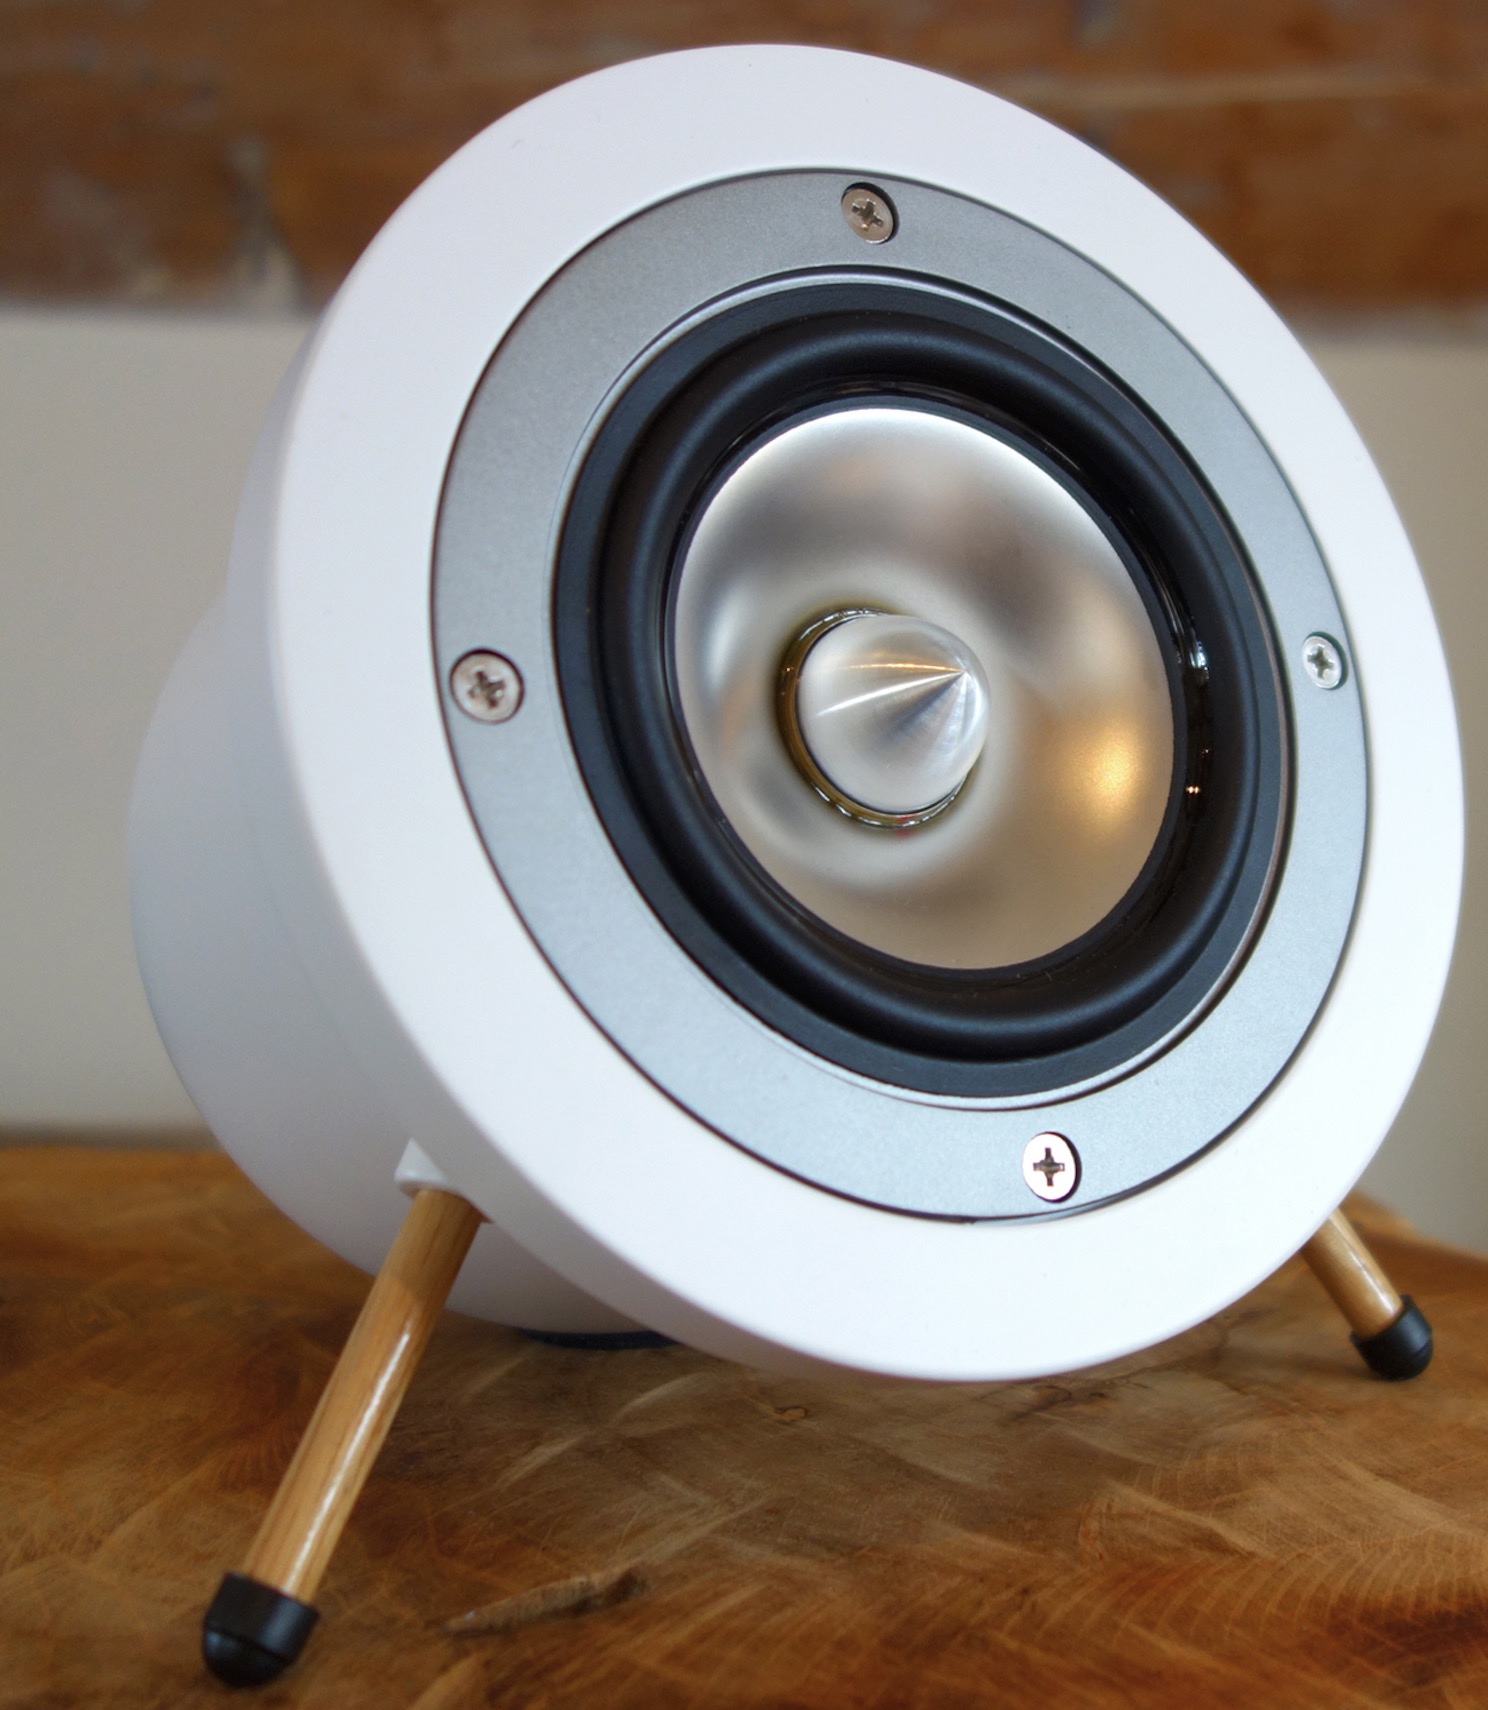 Degas Audio D1 Speaker: Using full-range titanium drivers